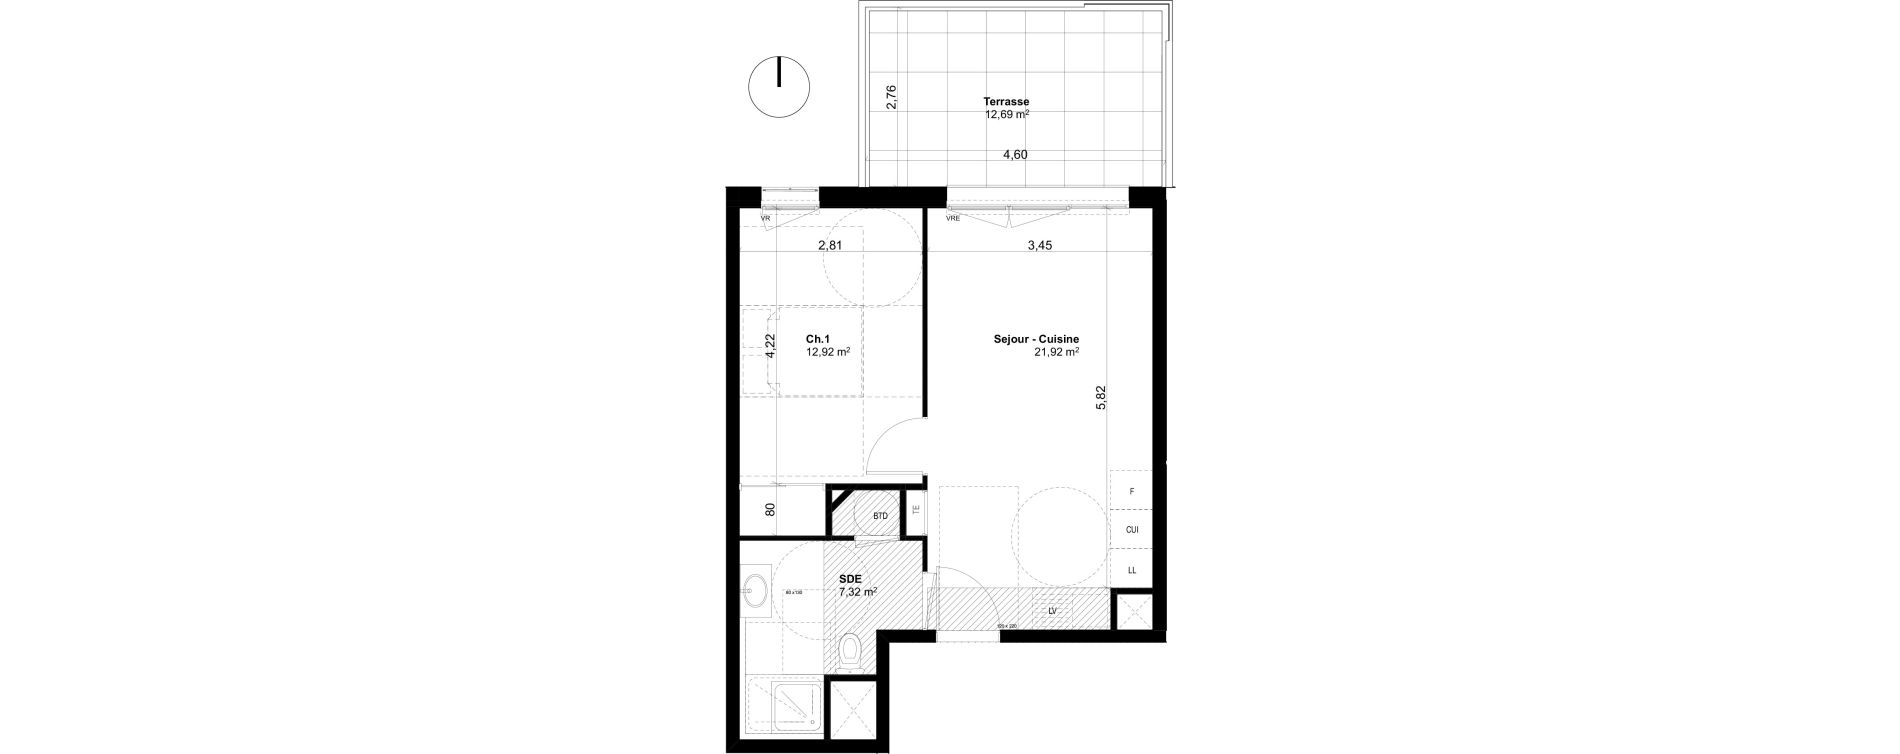 Appartement T2 de 42,16 m2 &agrave; Ventabren L heritiere